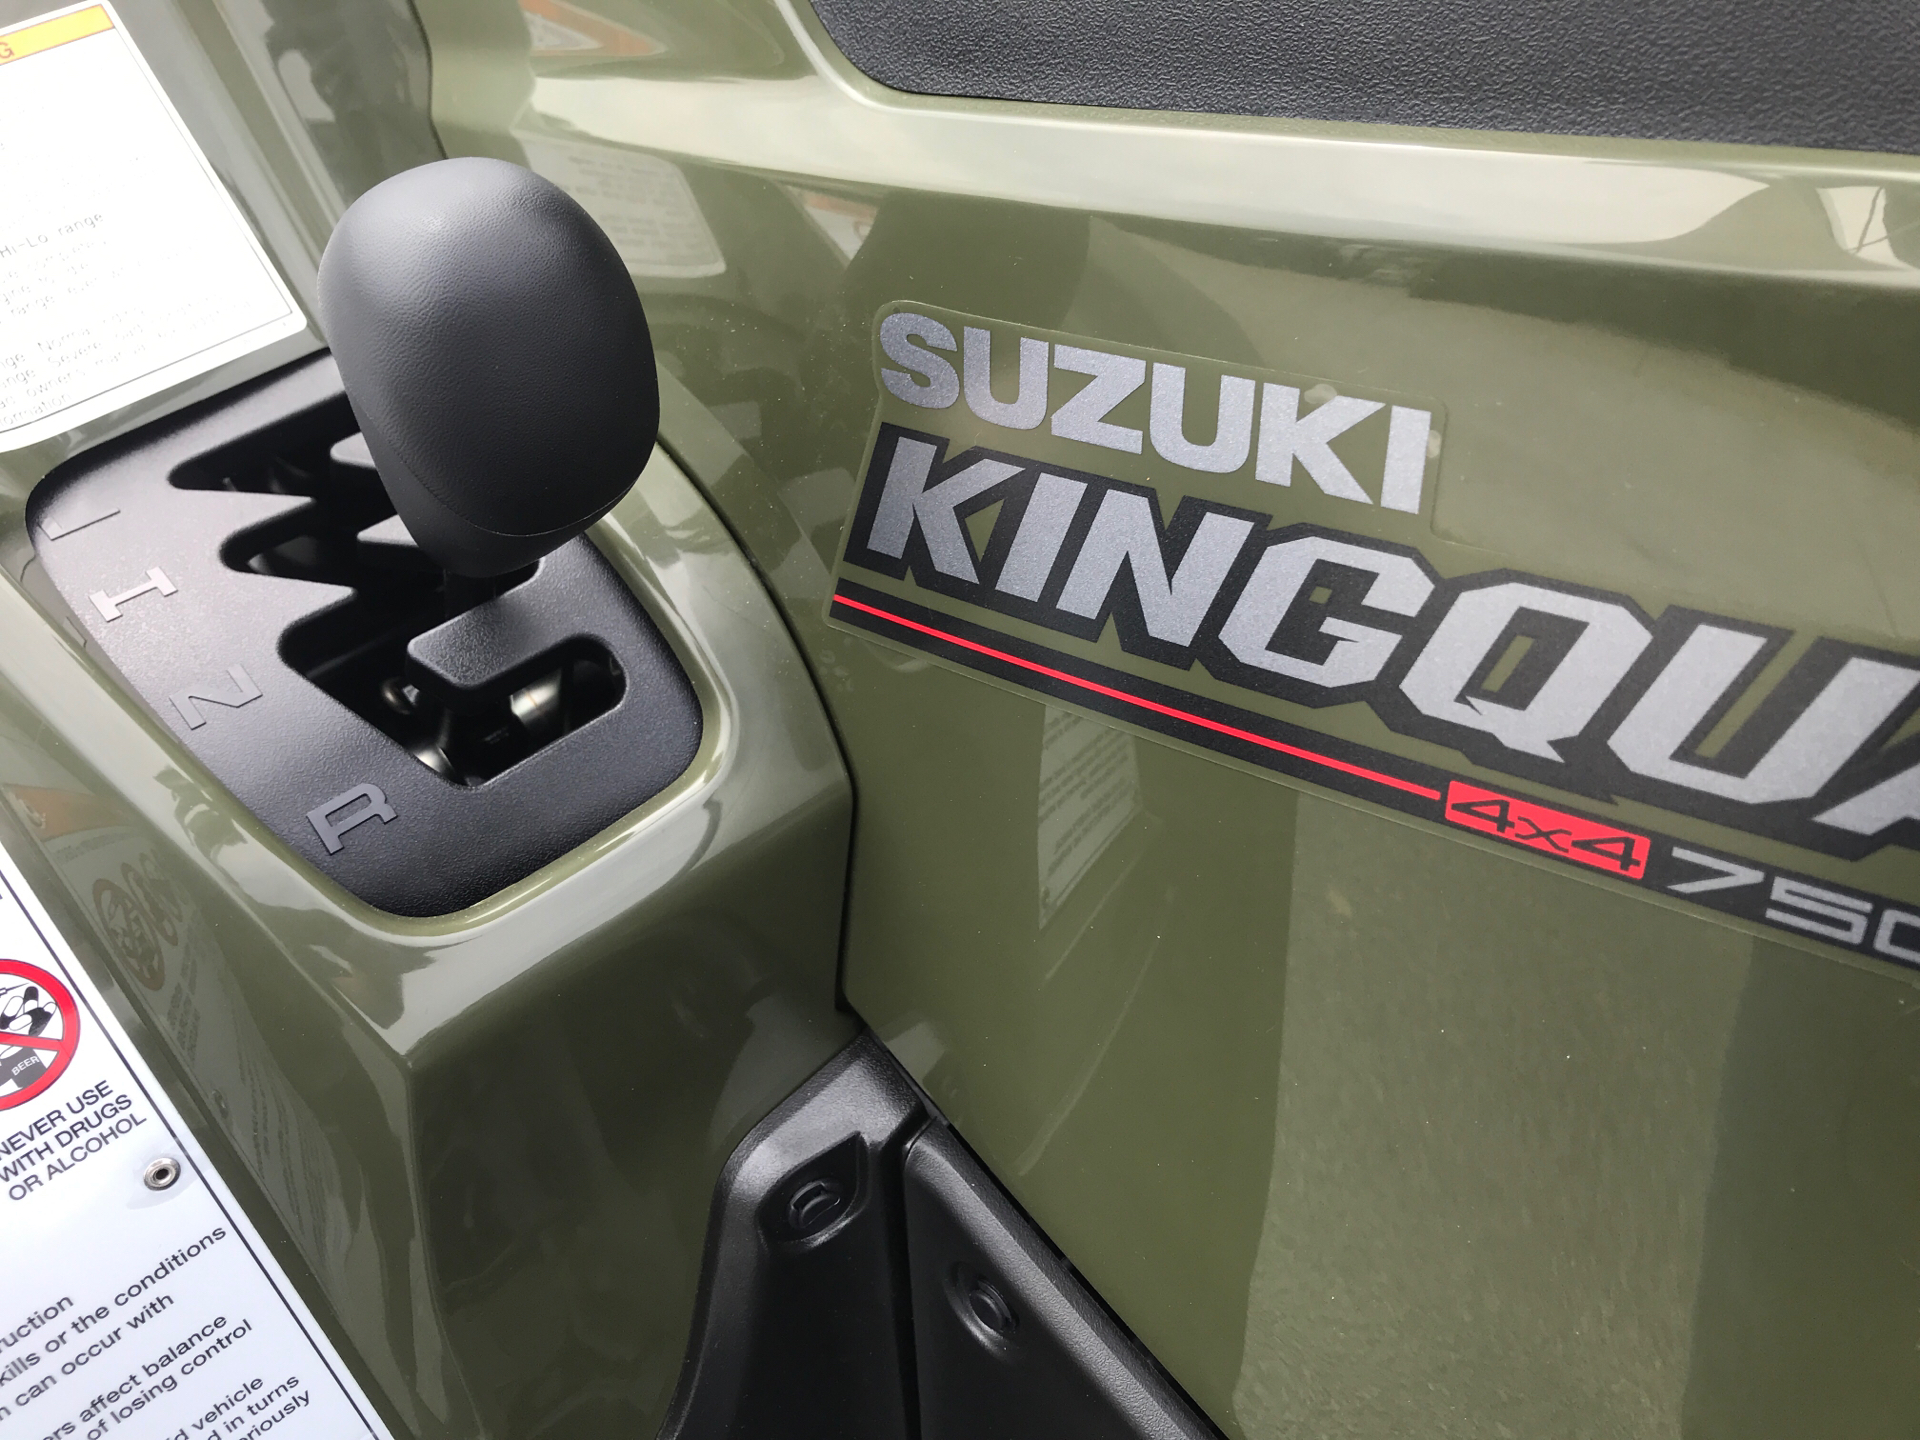 2021 Suzuki KingQuad 750AXi Power Steering in Greenville, North Carolina - Photo 13